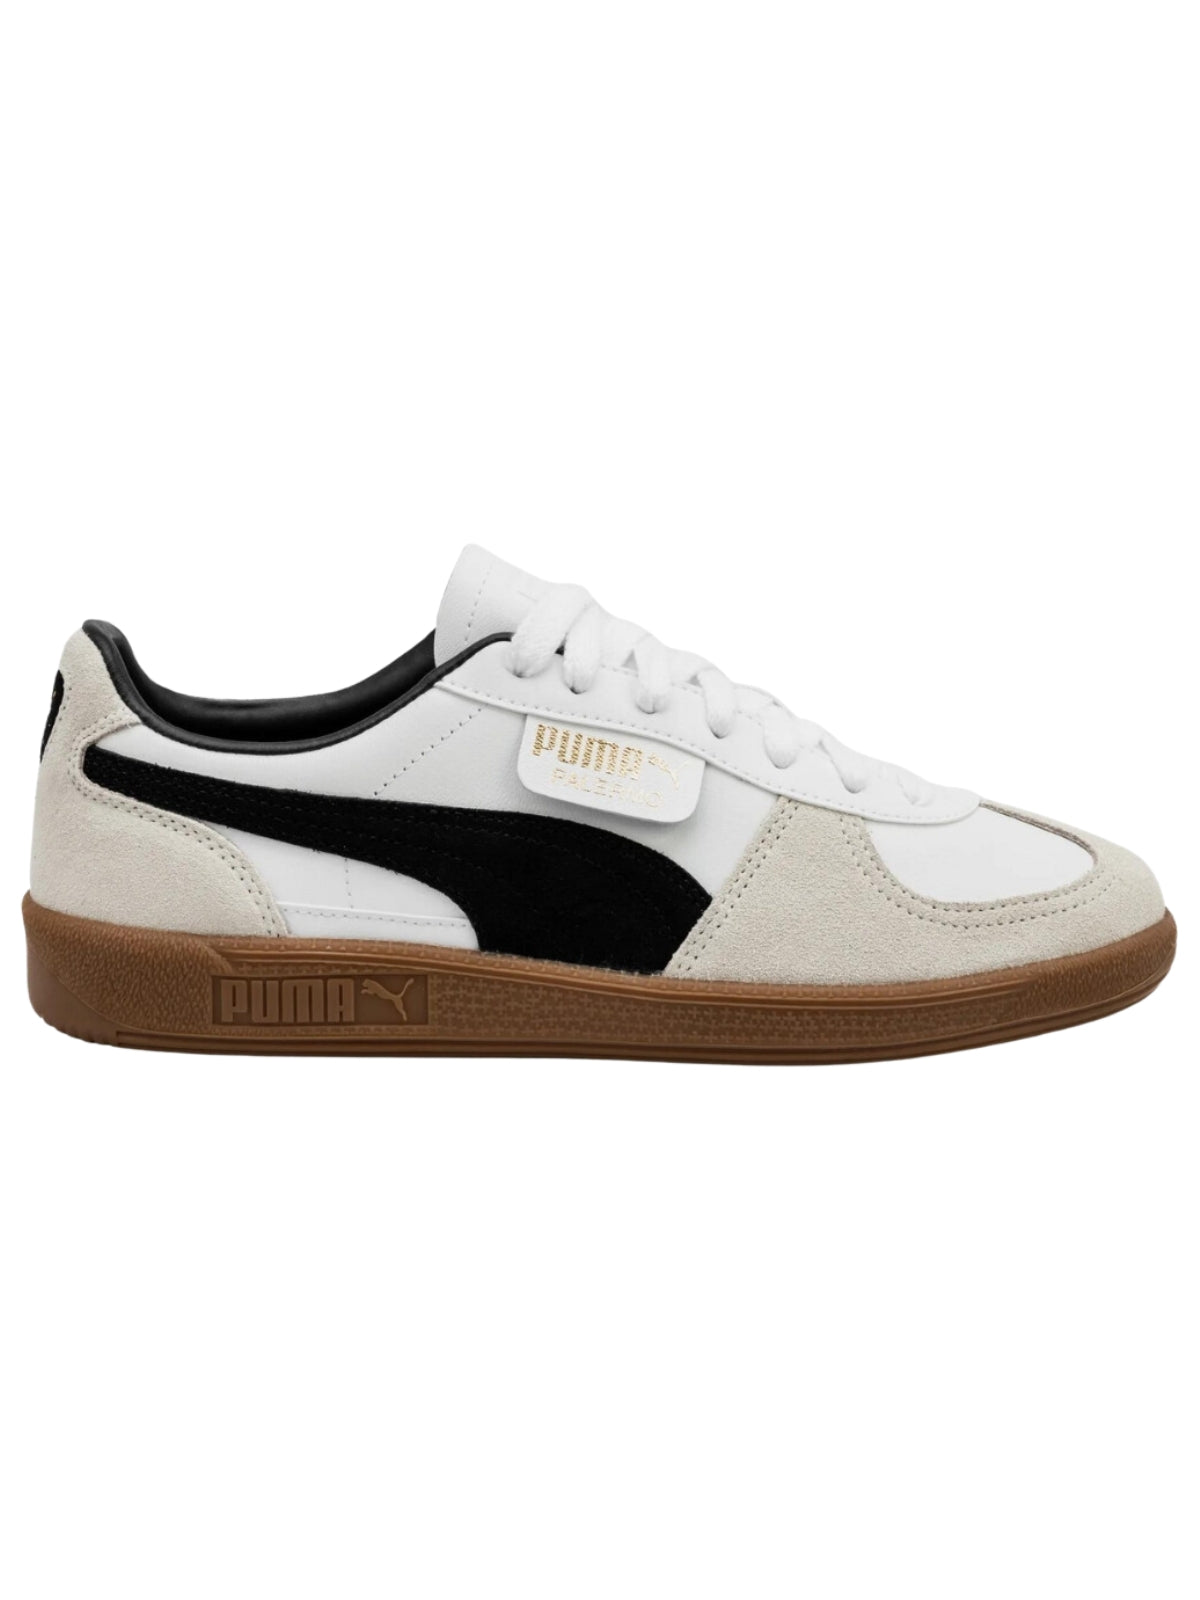 Puma Sneaker Palermo White-Vapor Gray